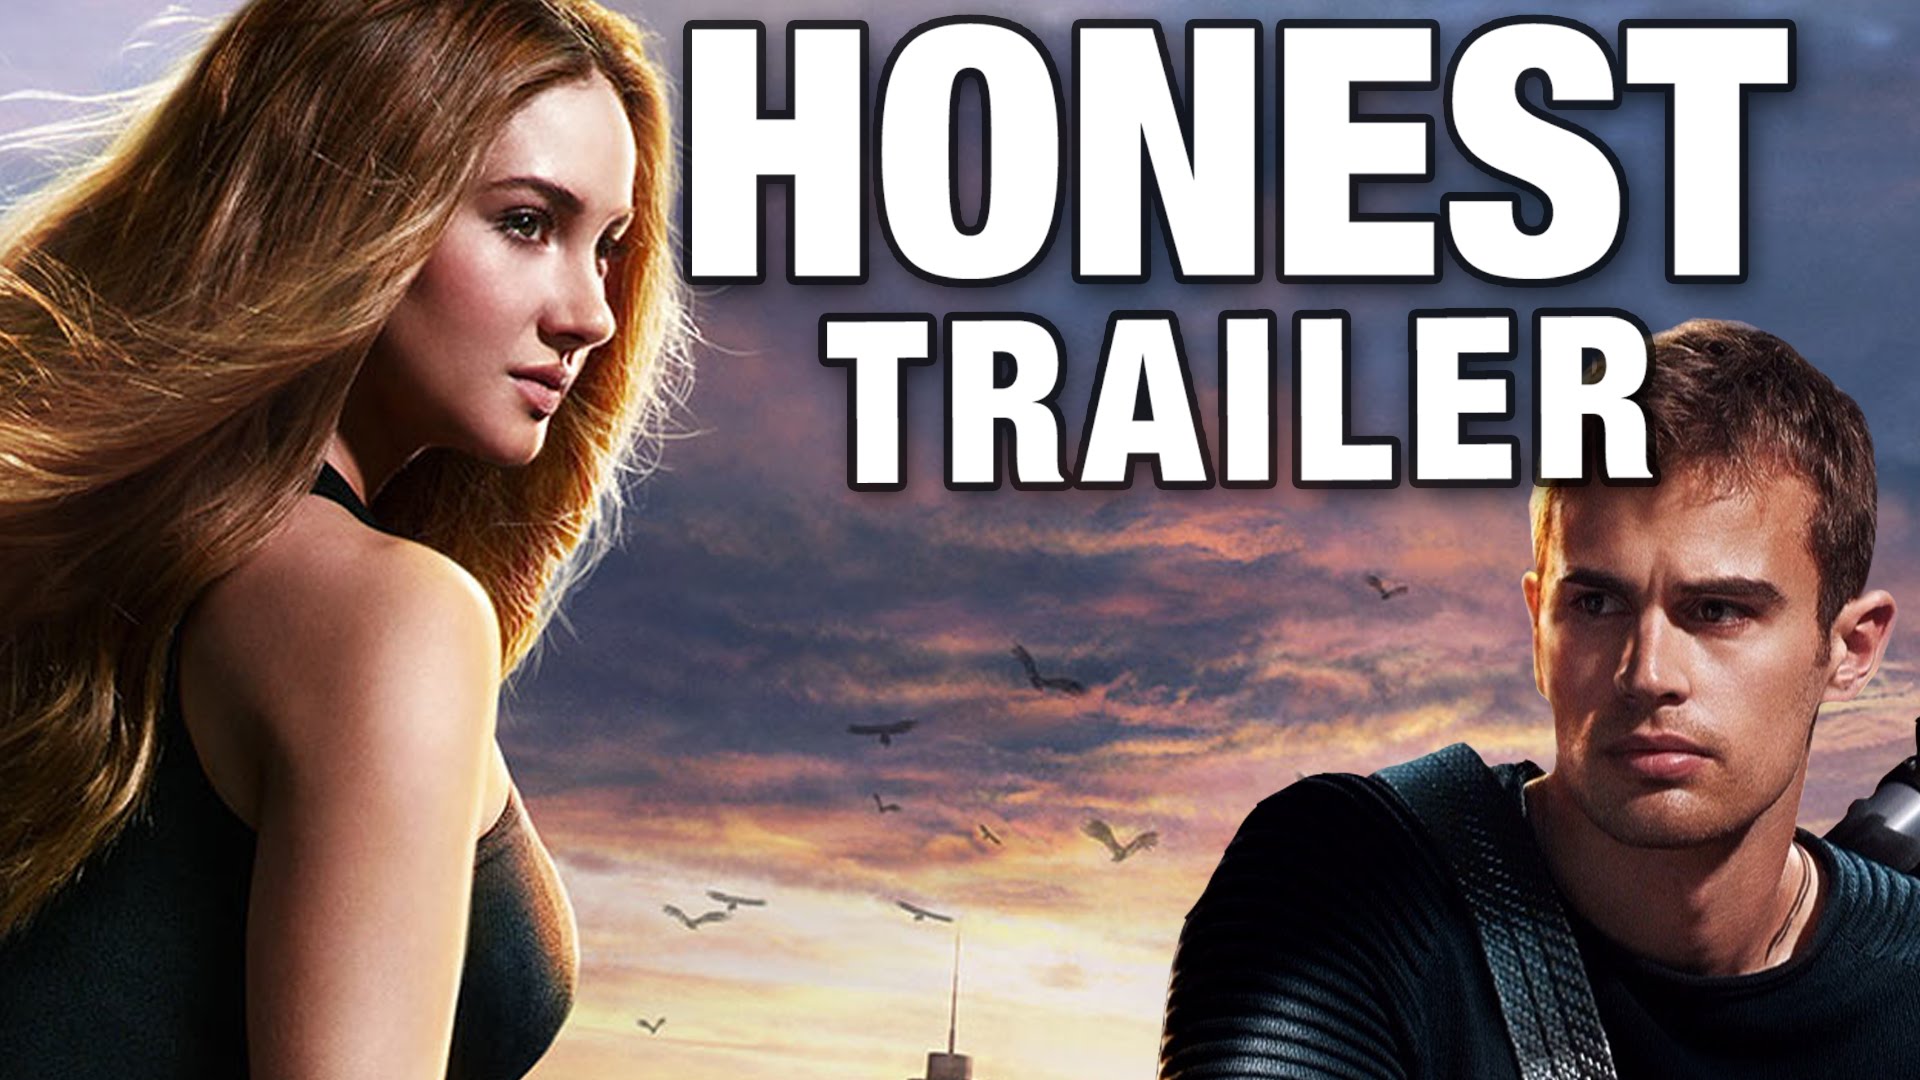 Watch: Divergent Gets The “Honest” Trailer Treatment